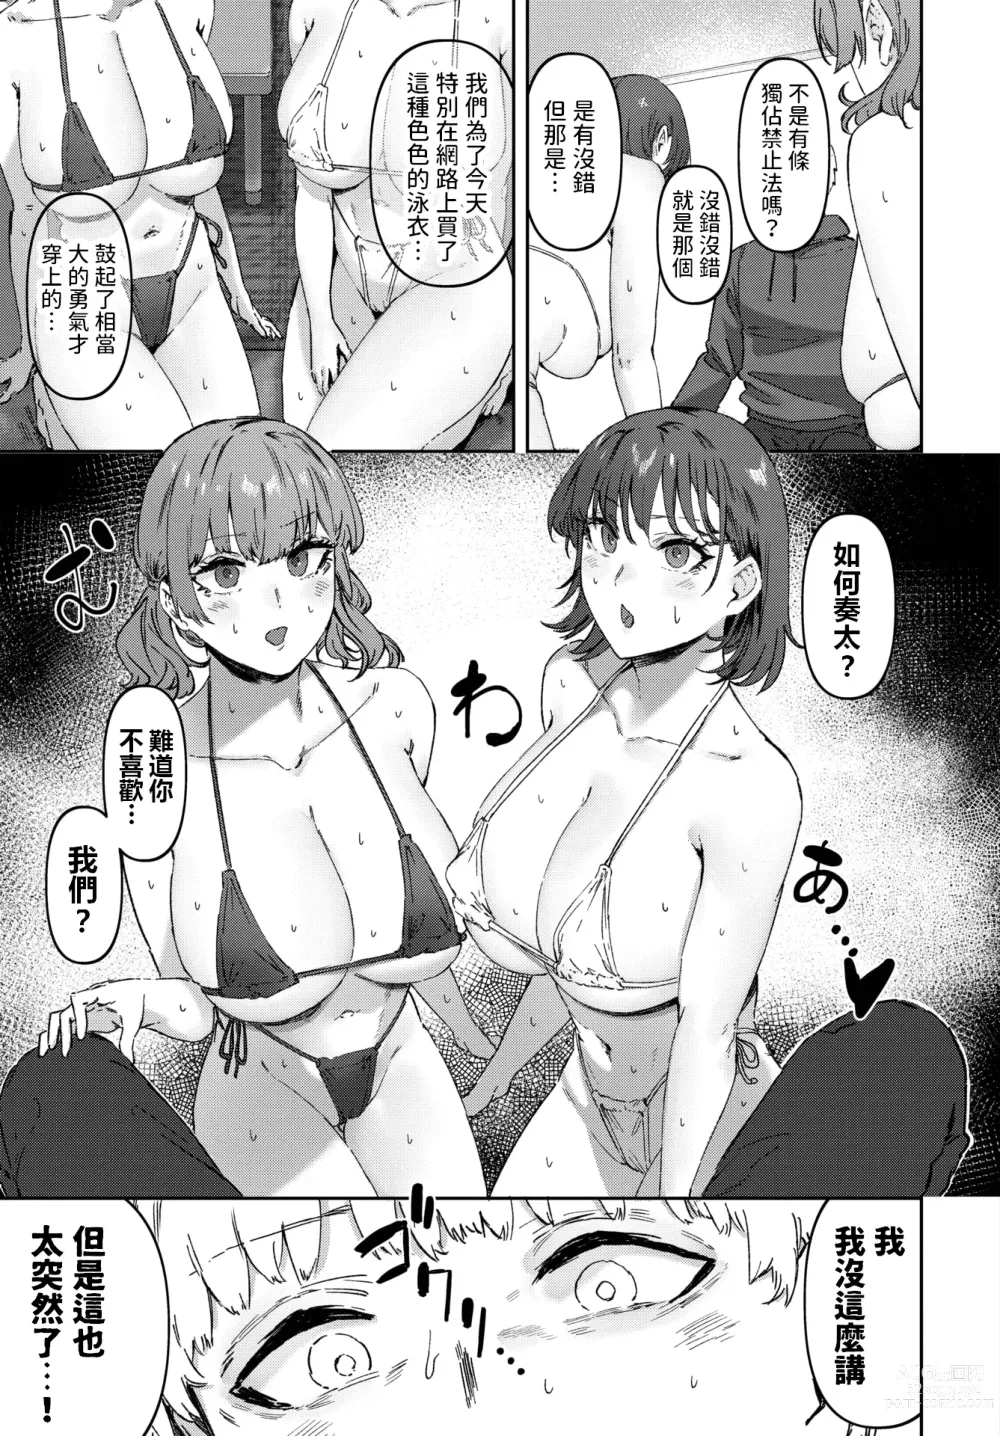 Page 7 of manga Kimi no Kimochi mo Share Shimasu! - Share your feelings!